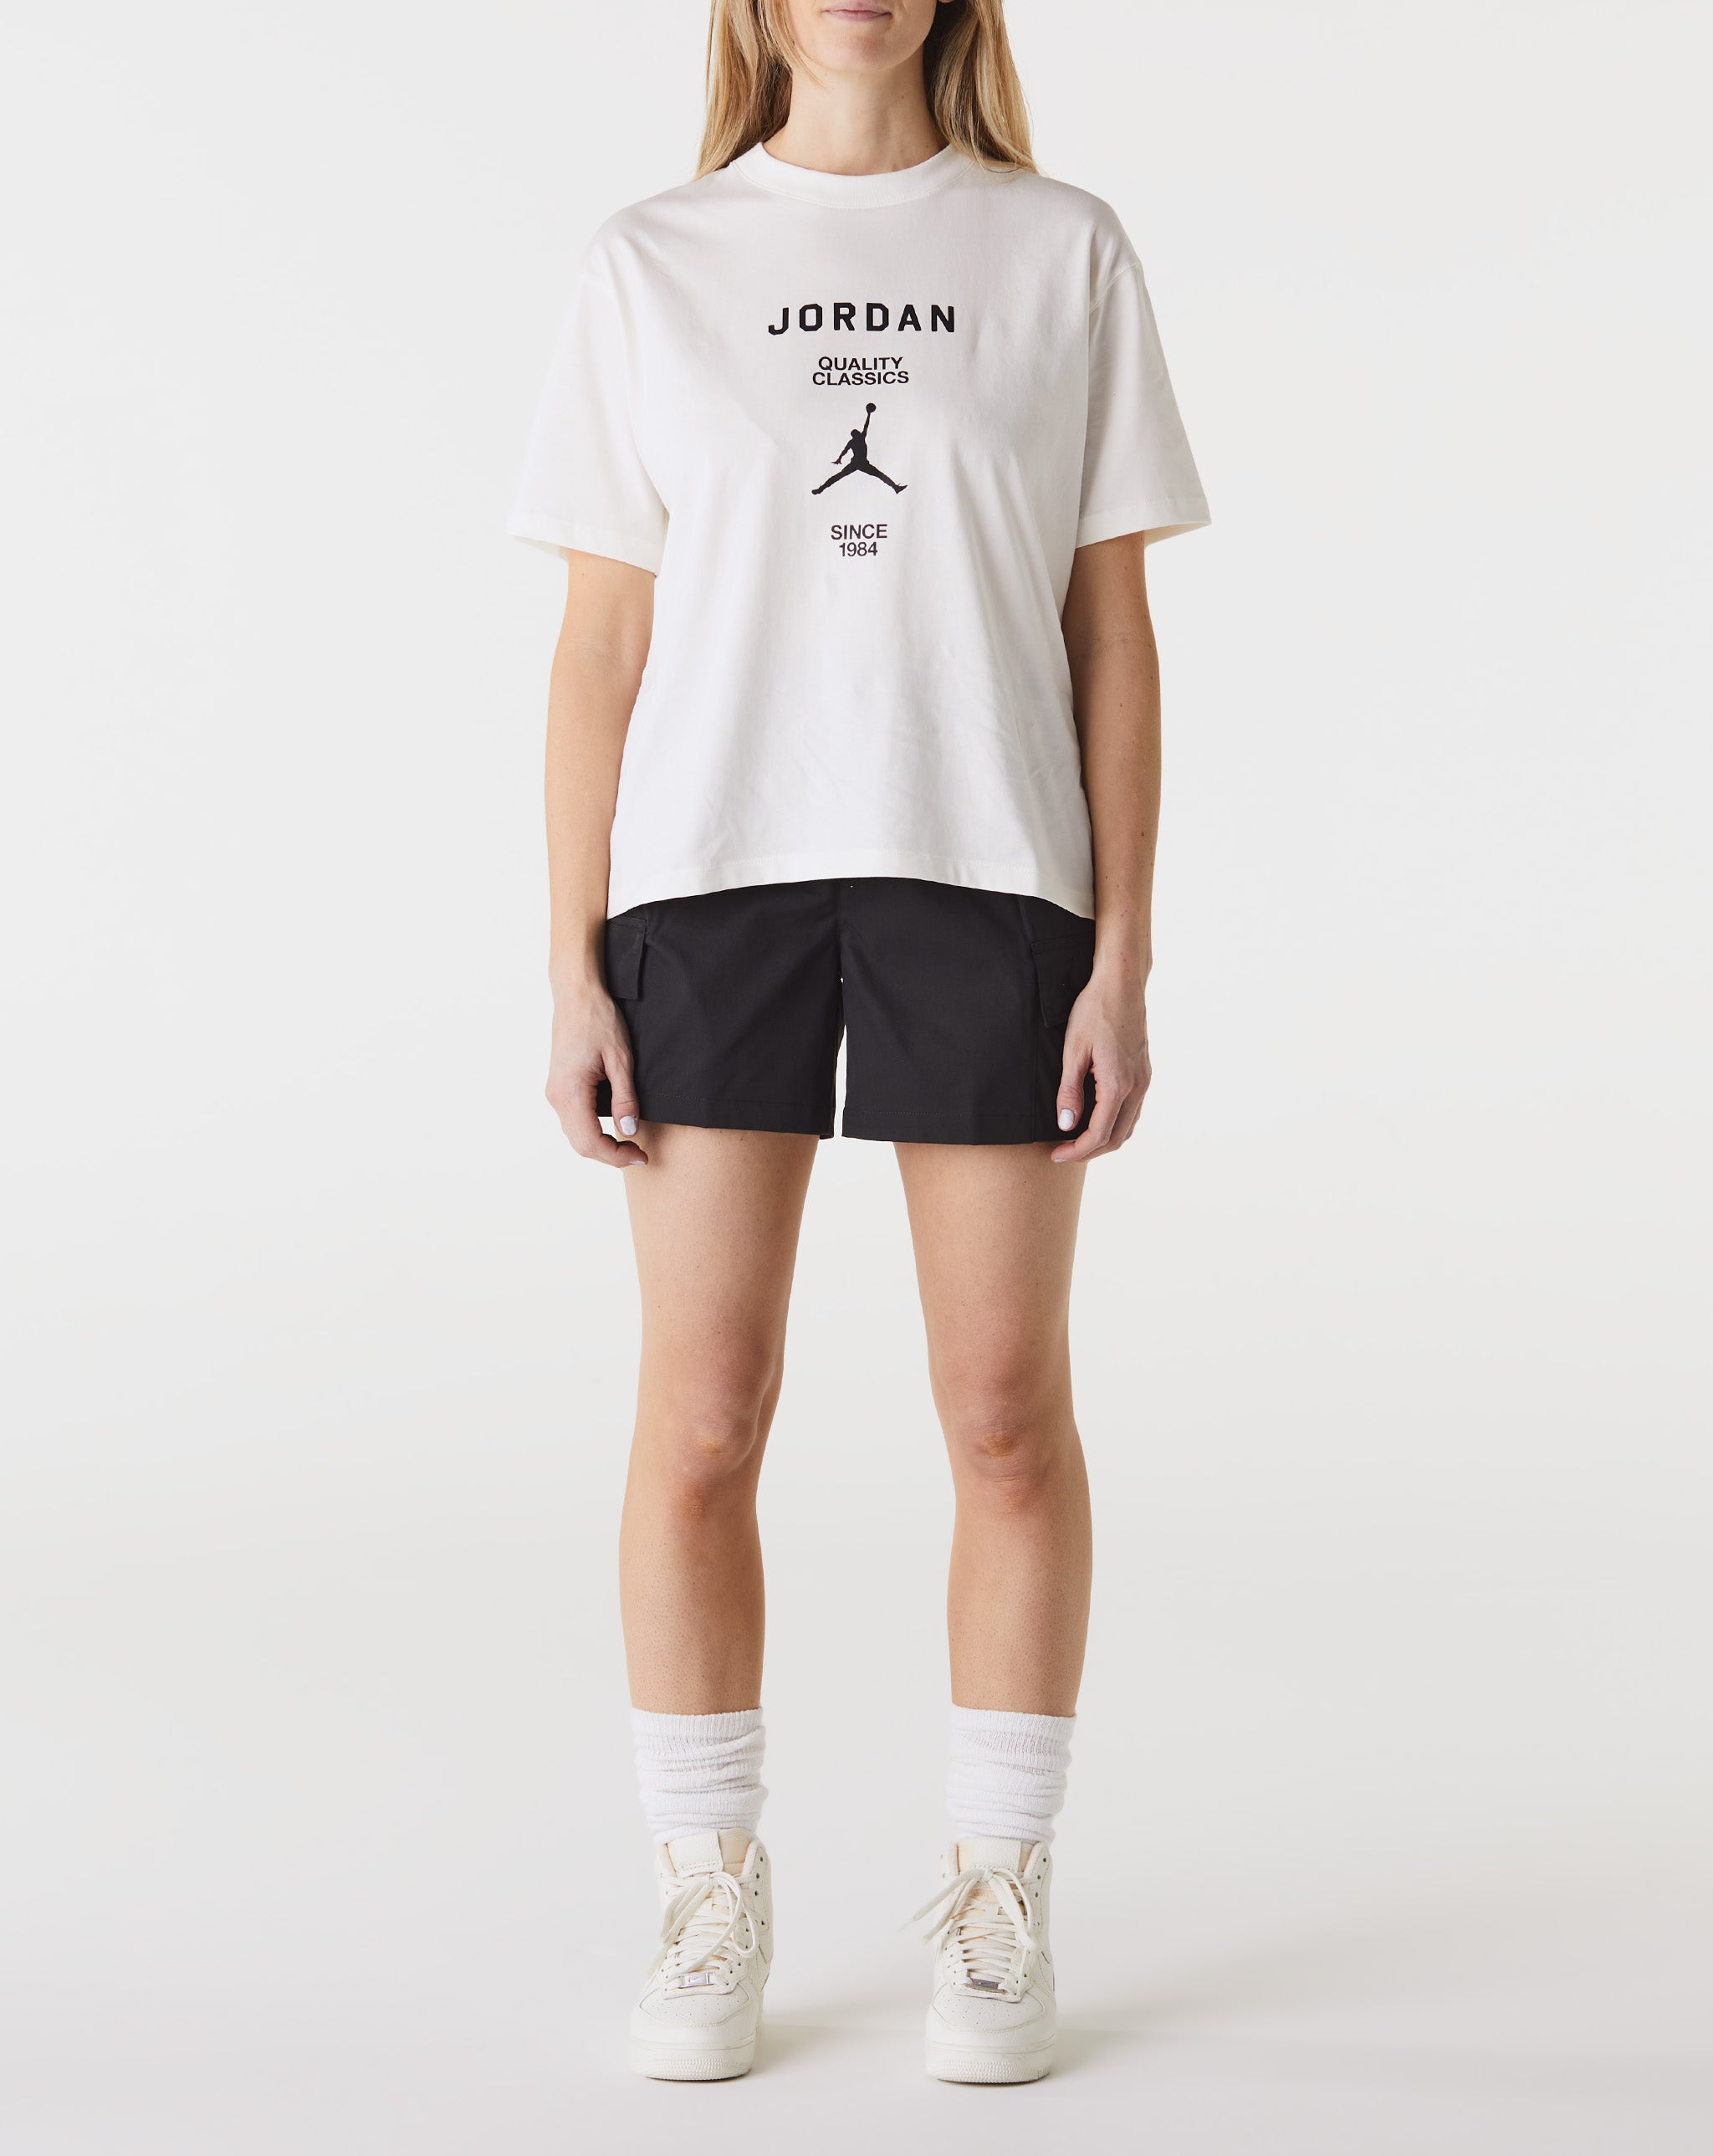 Air Jordan Women's Jordan Quality Classics T-Shirt  - Cheap Atelier-lumieres Jordan outlet